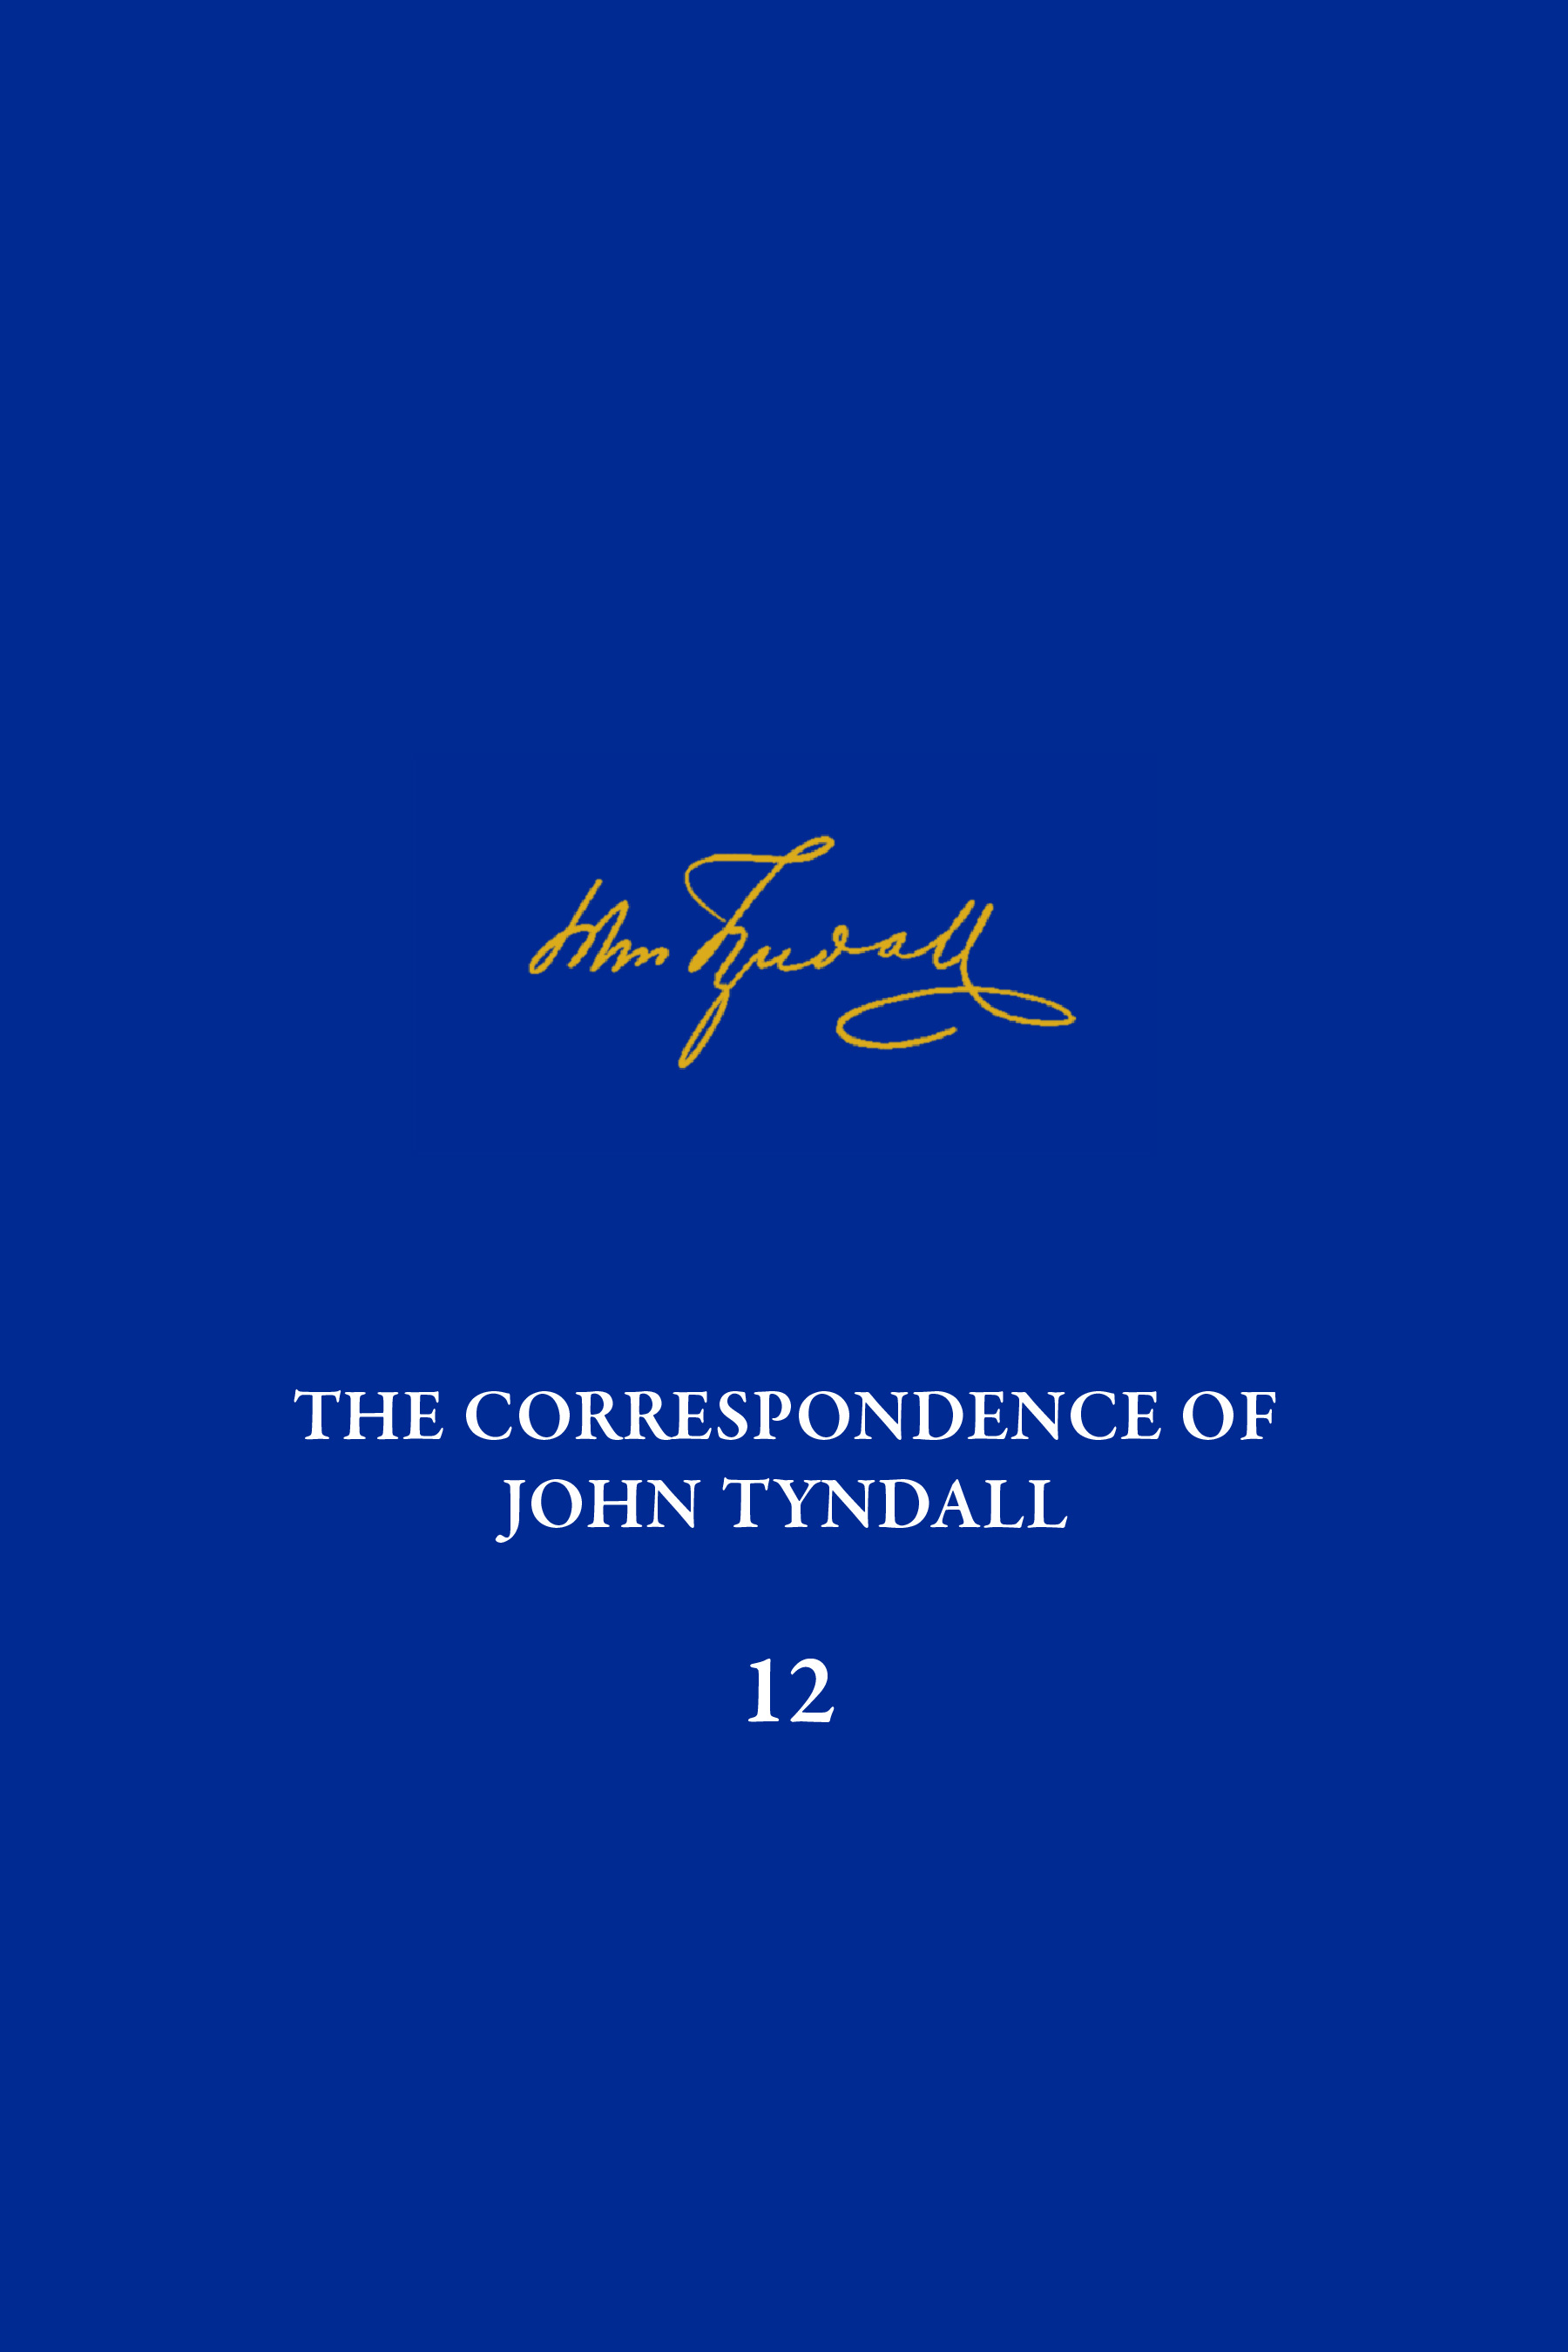 Correspondence of John Tyndall, Volume 12